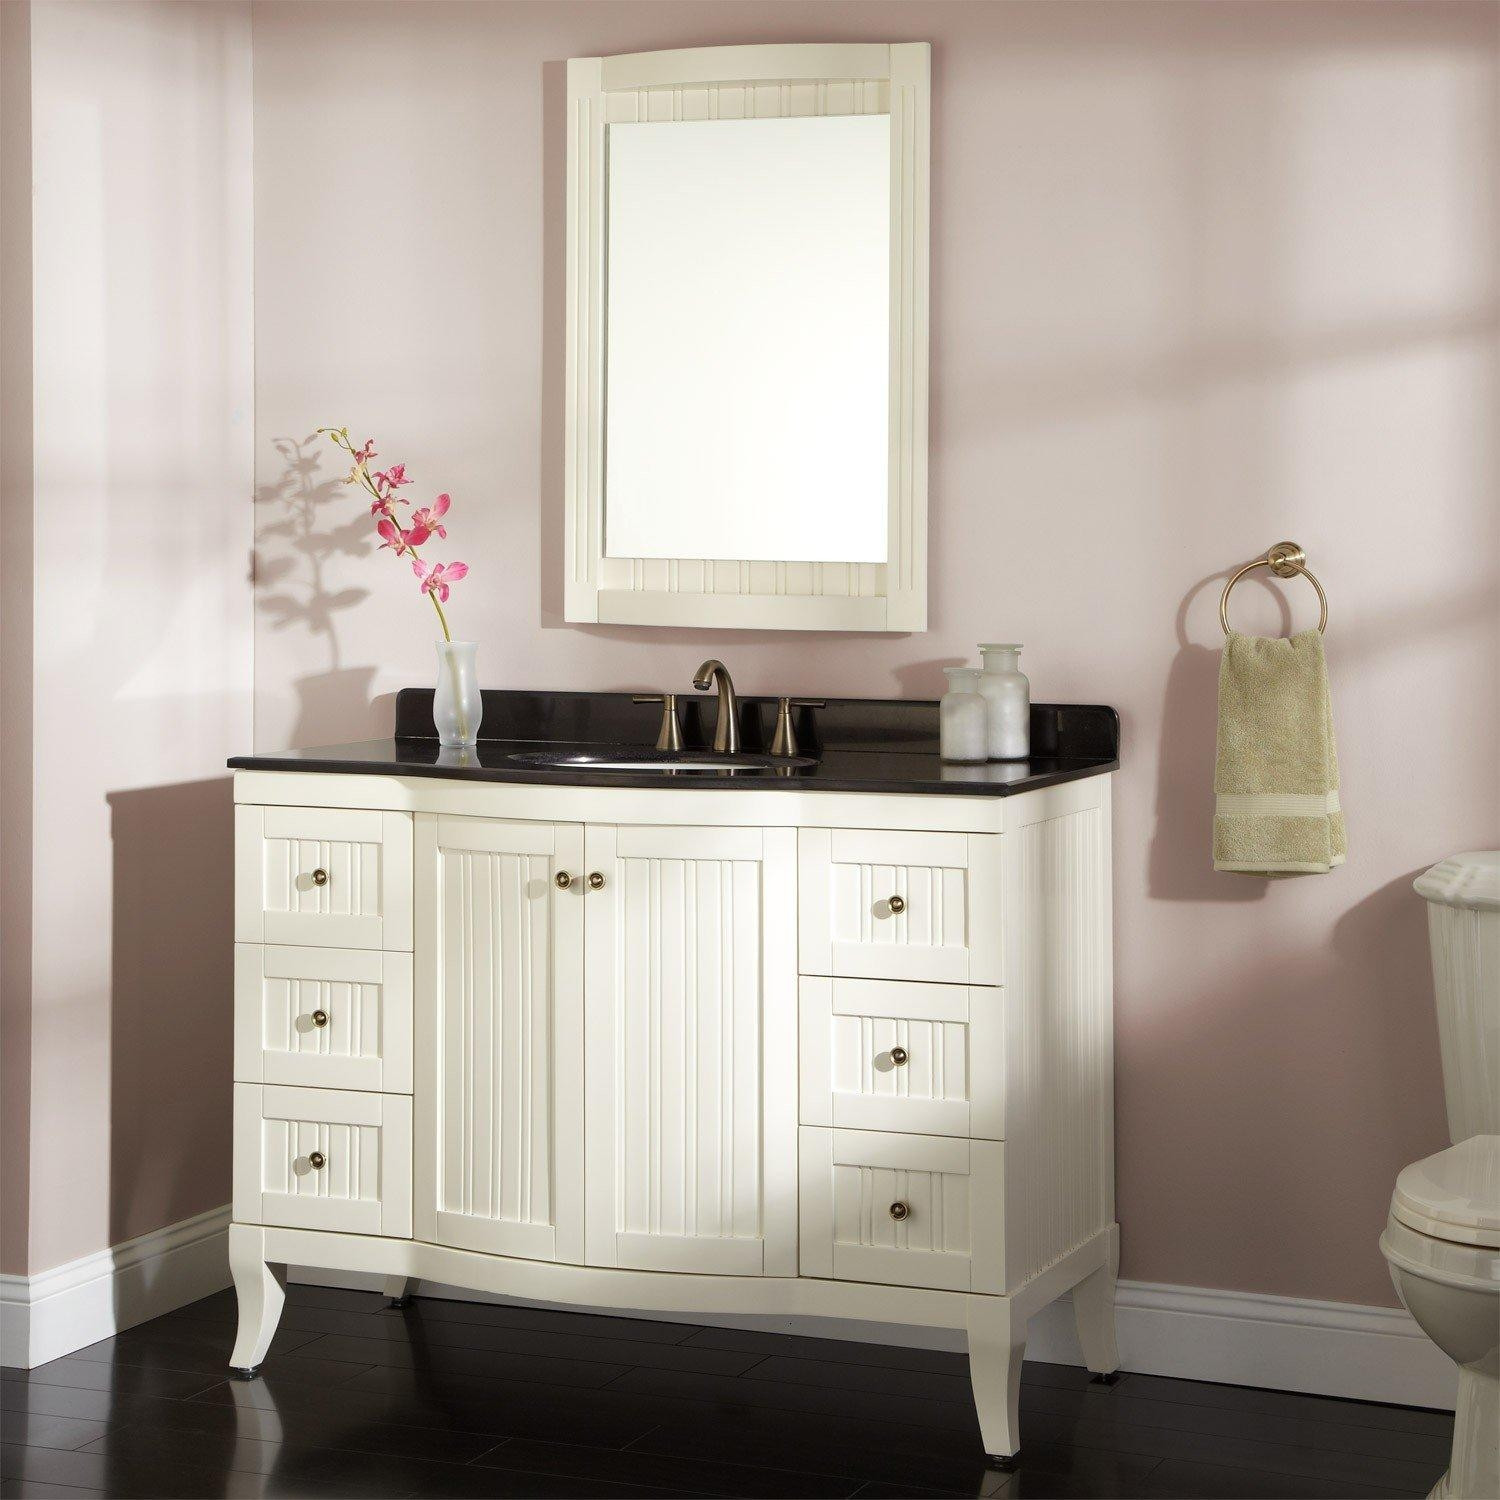 Decorative Bathroom Vanities
 20 Collection of Decorative Mirrors for Bathroom Vanity